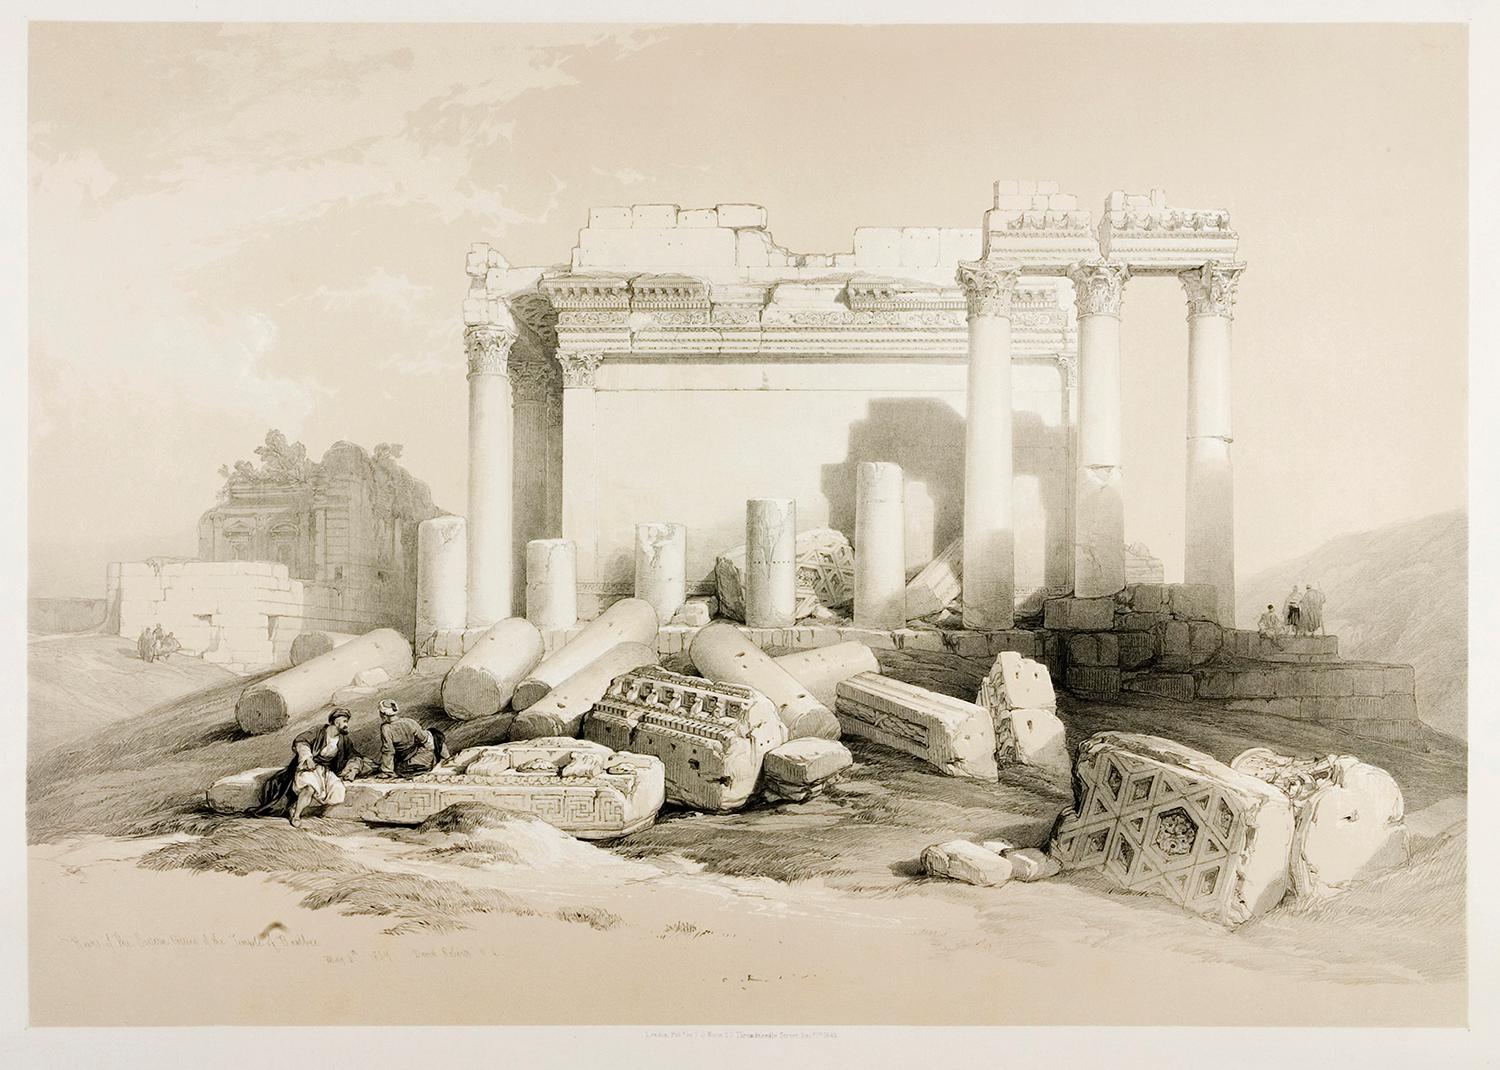 Eastern Portico, Baalbec, Lebanon. David Robert's Oriental lithograph, 1843.